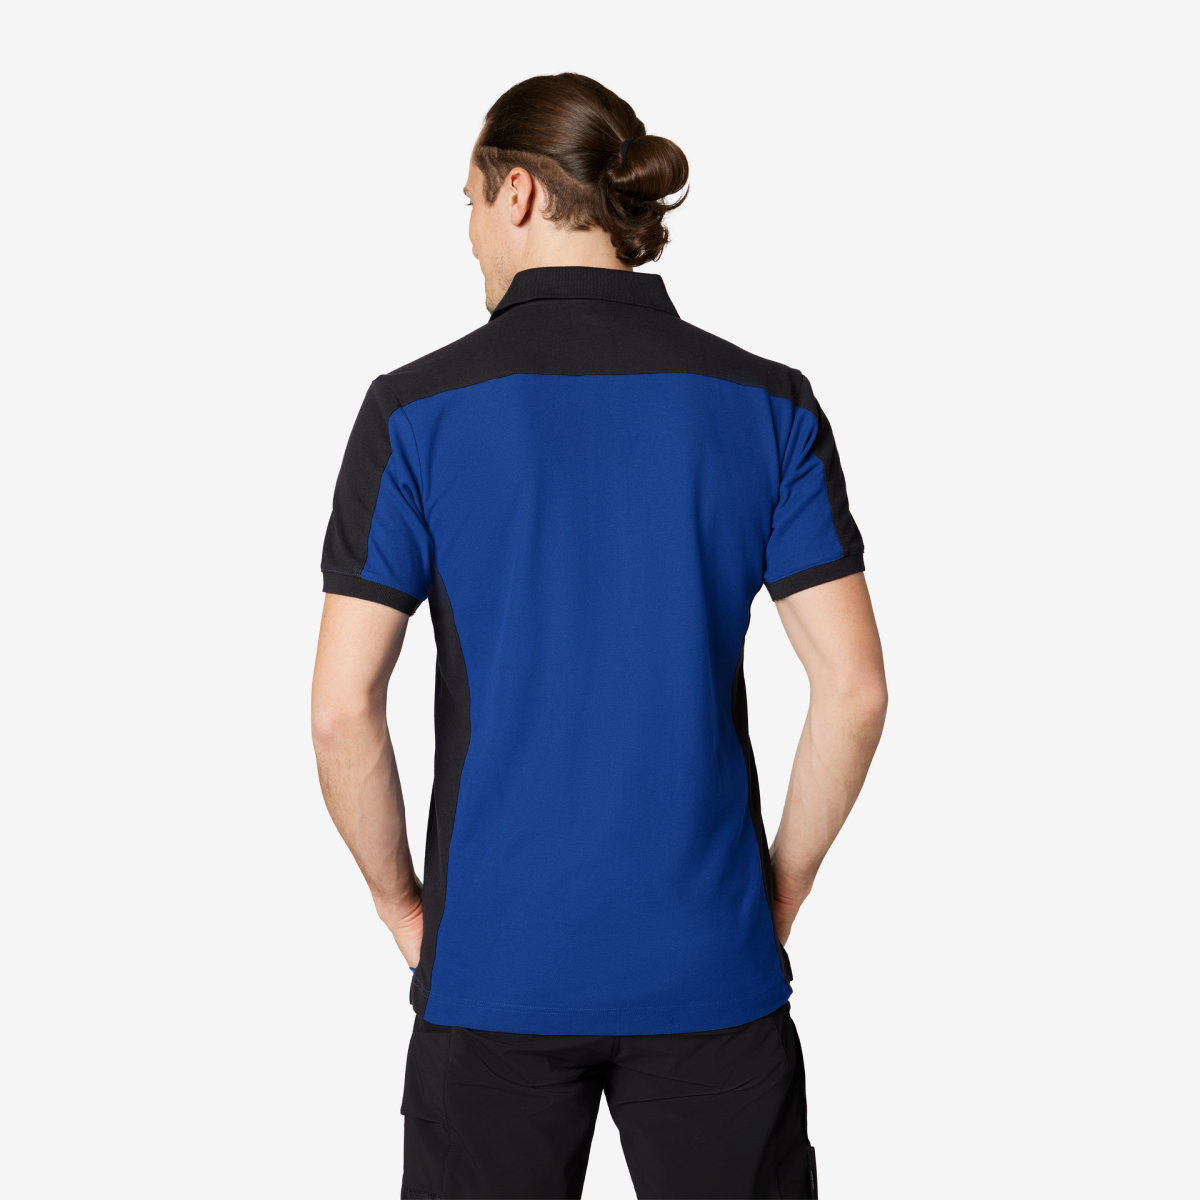 FHB Poloshirt 91490 KONRAD royalblau schwarz Polo-Shirt Arbeitshemd